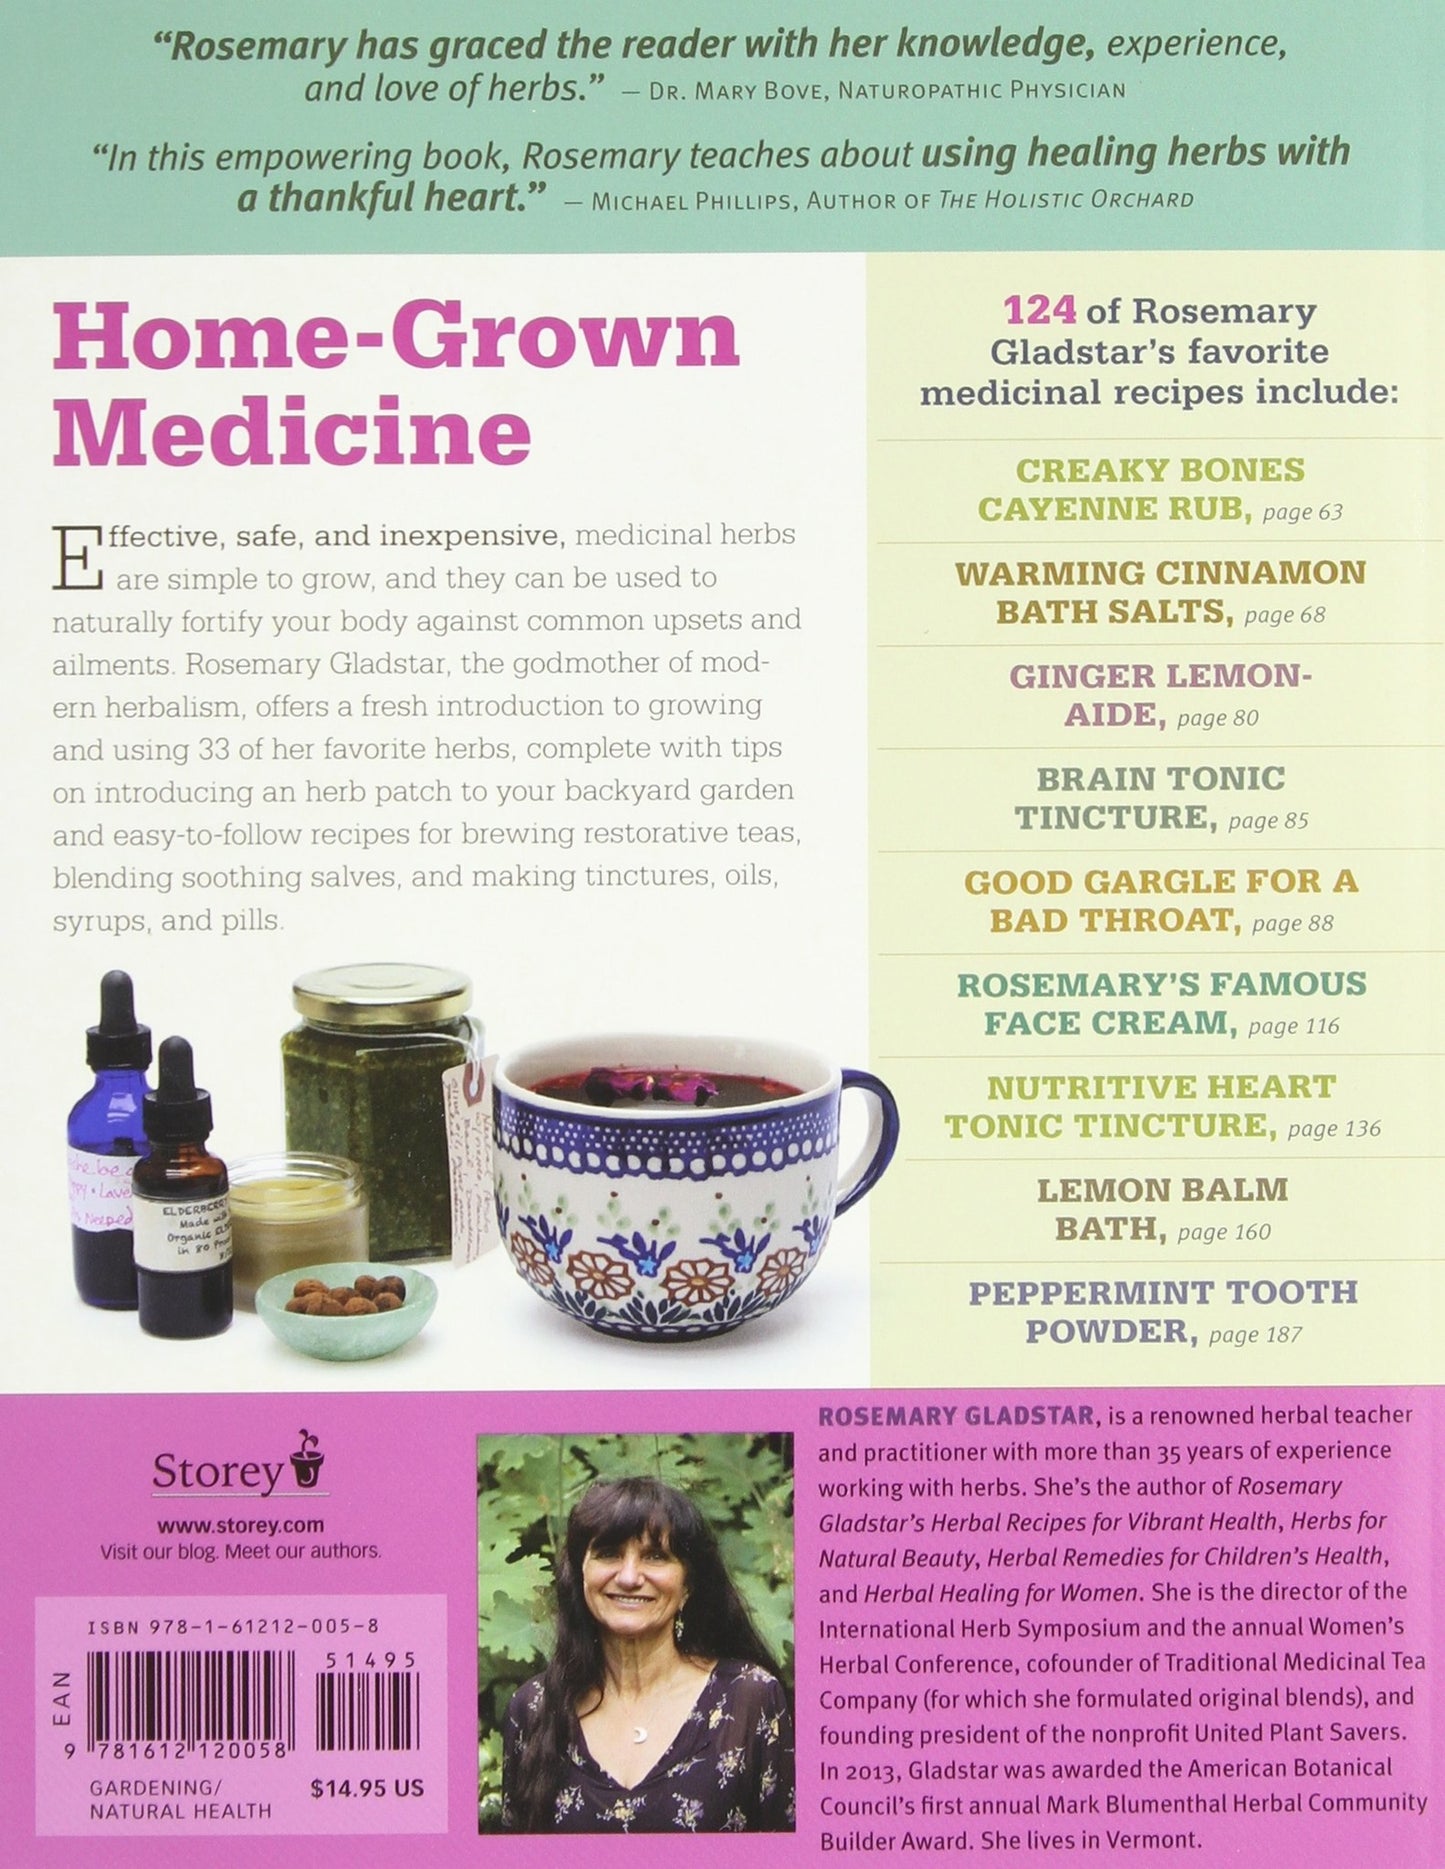 Rosemary Gladstar's Medicinal Herbs: A beginner’s Guide